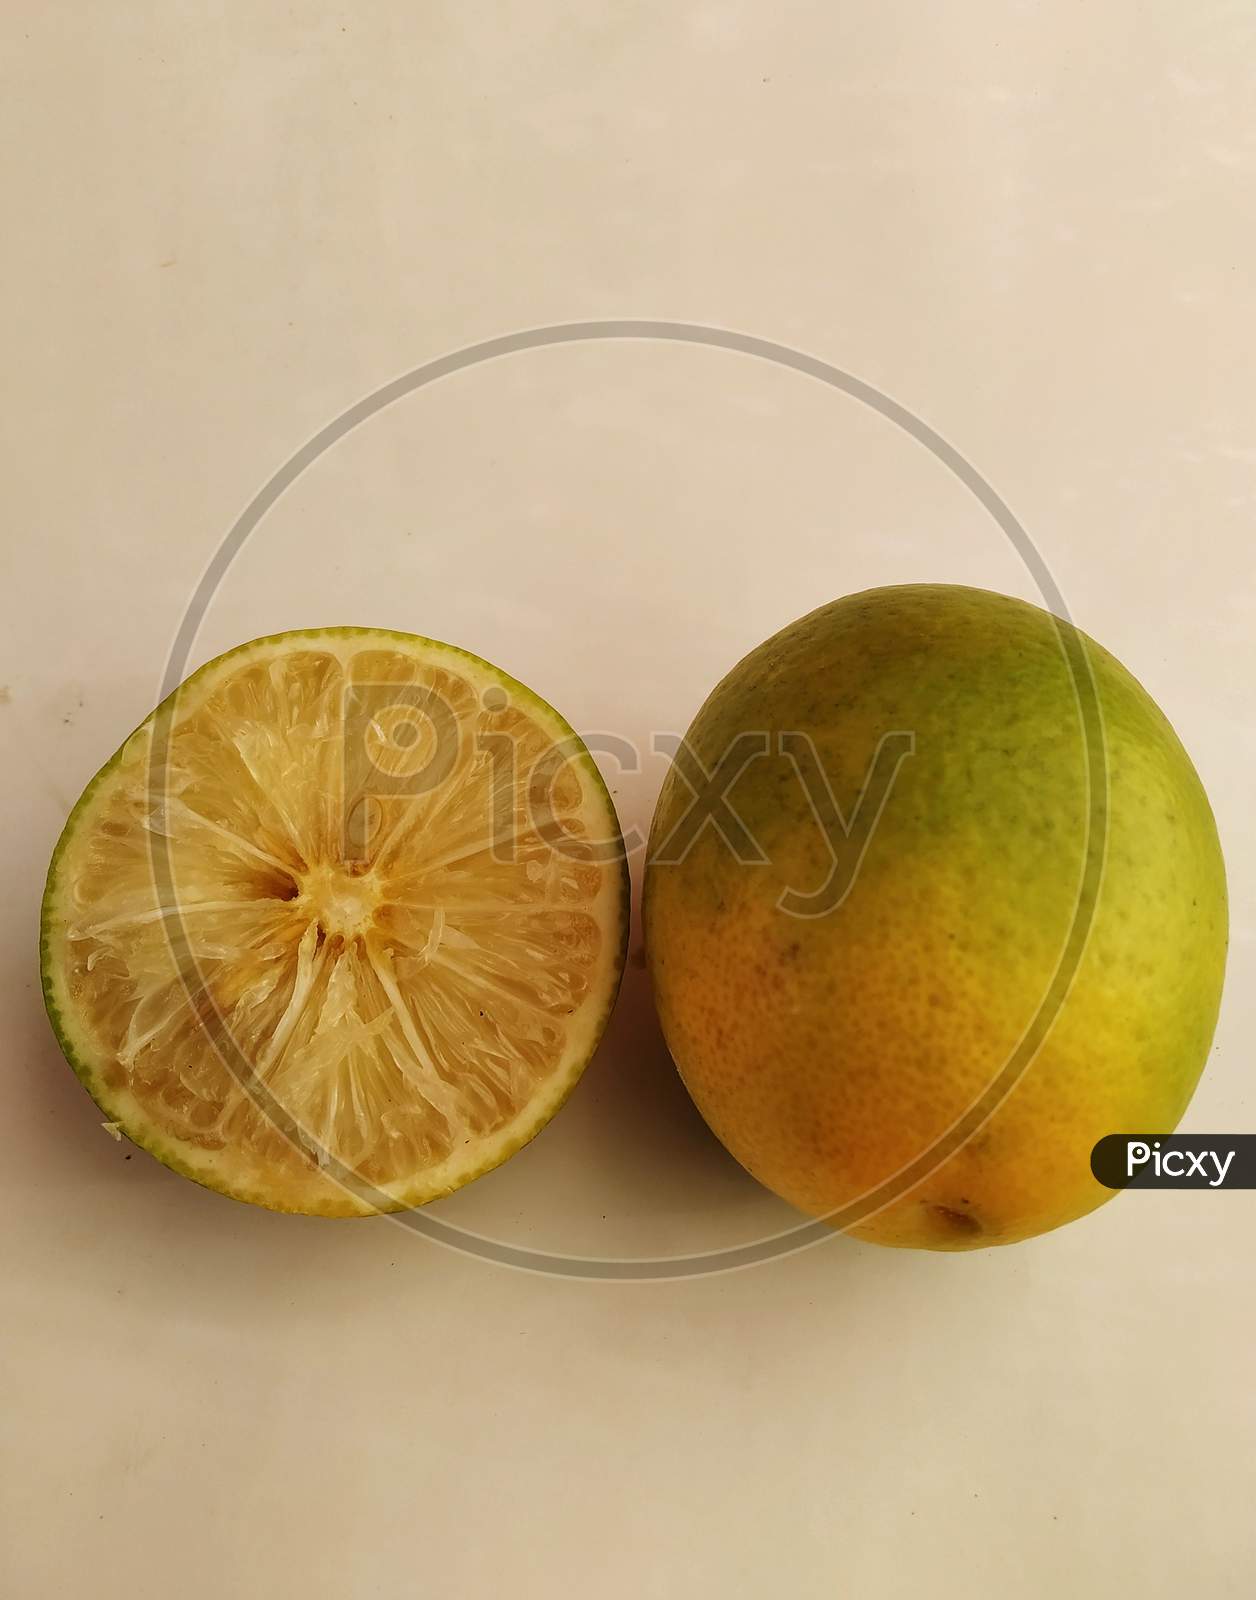 Photo Of Mosambi, Also Known As Sweet Lemon, Scientific Name : Citrus Limetta